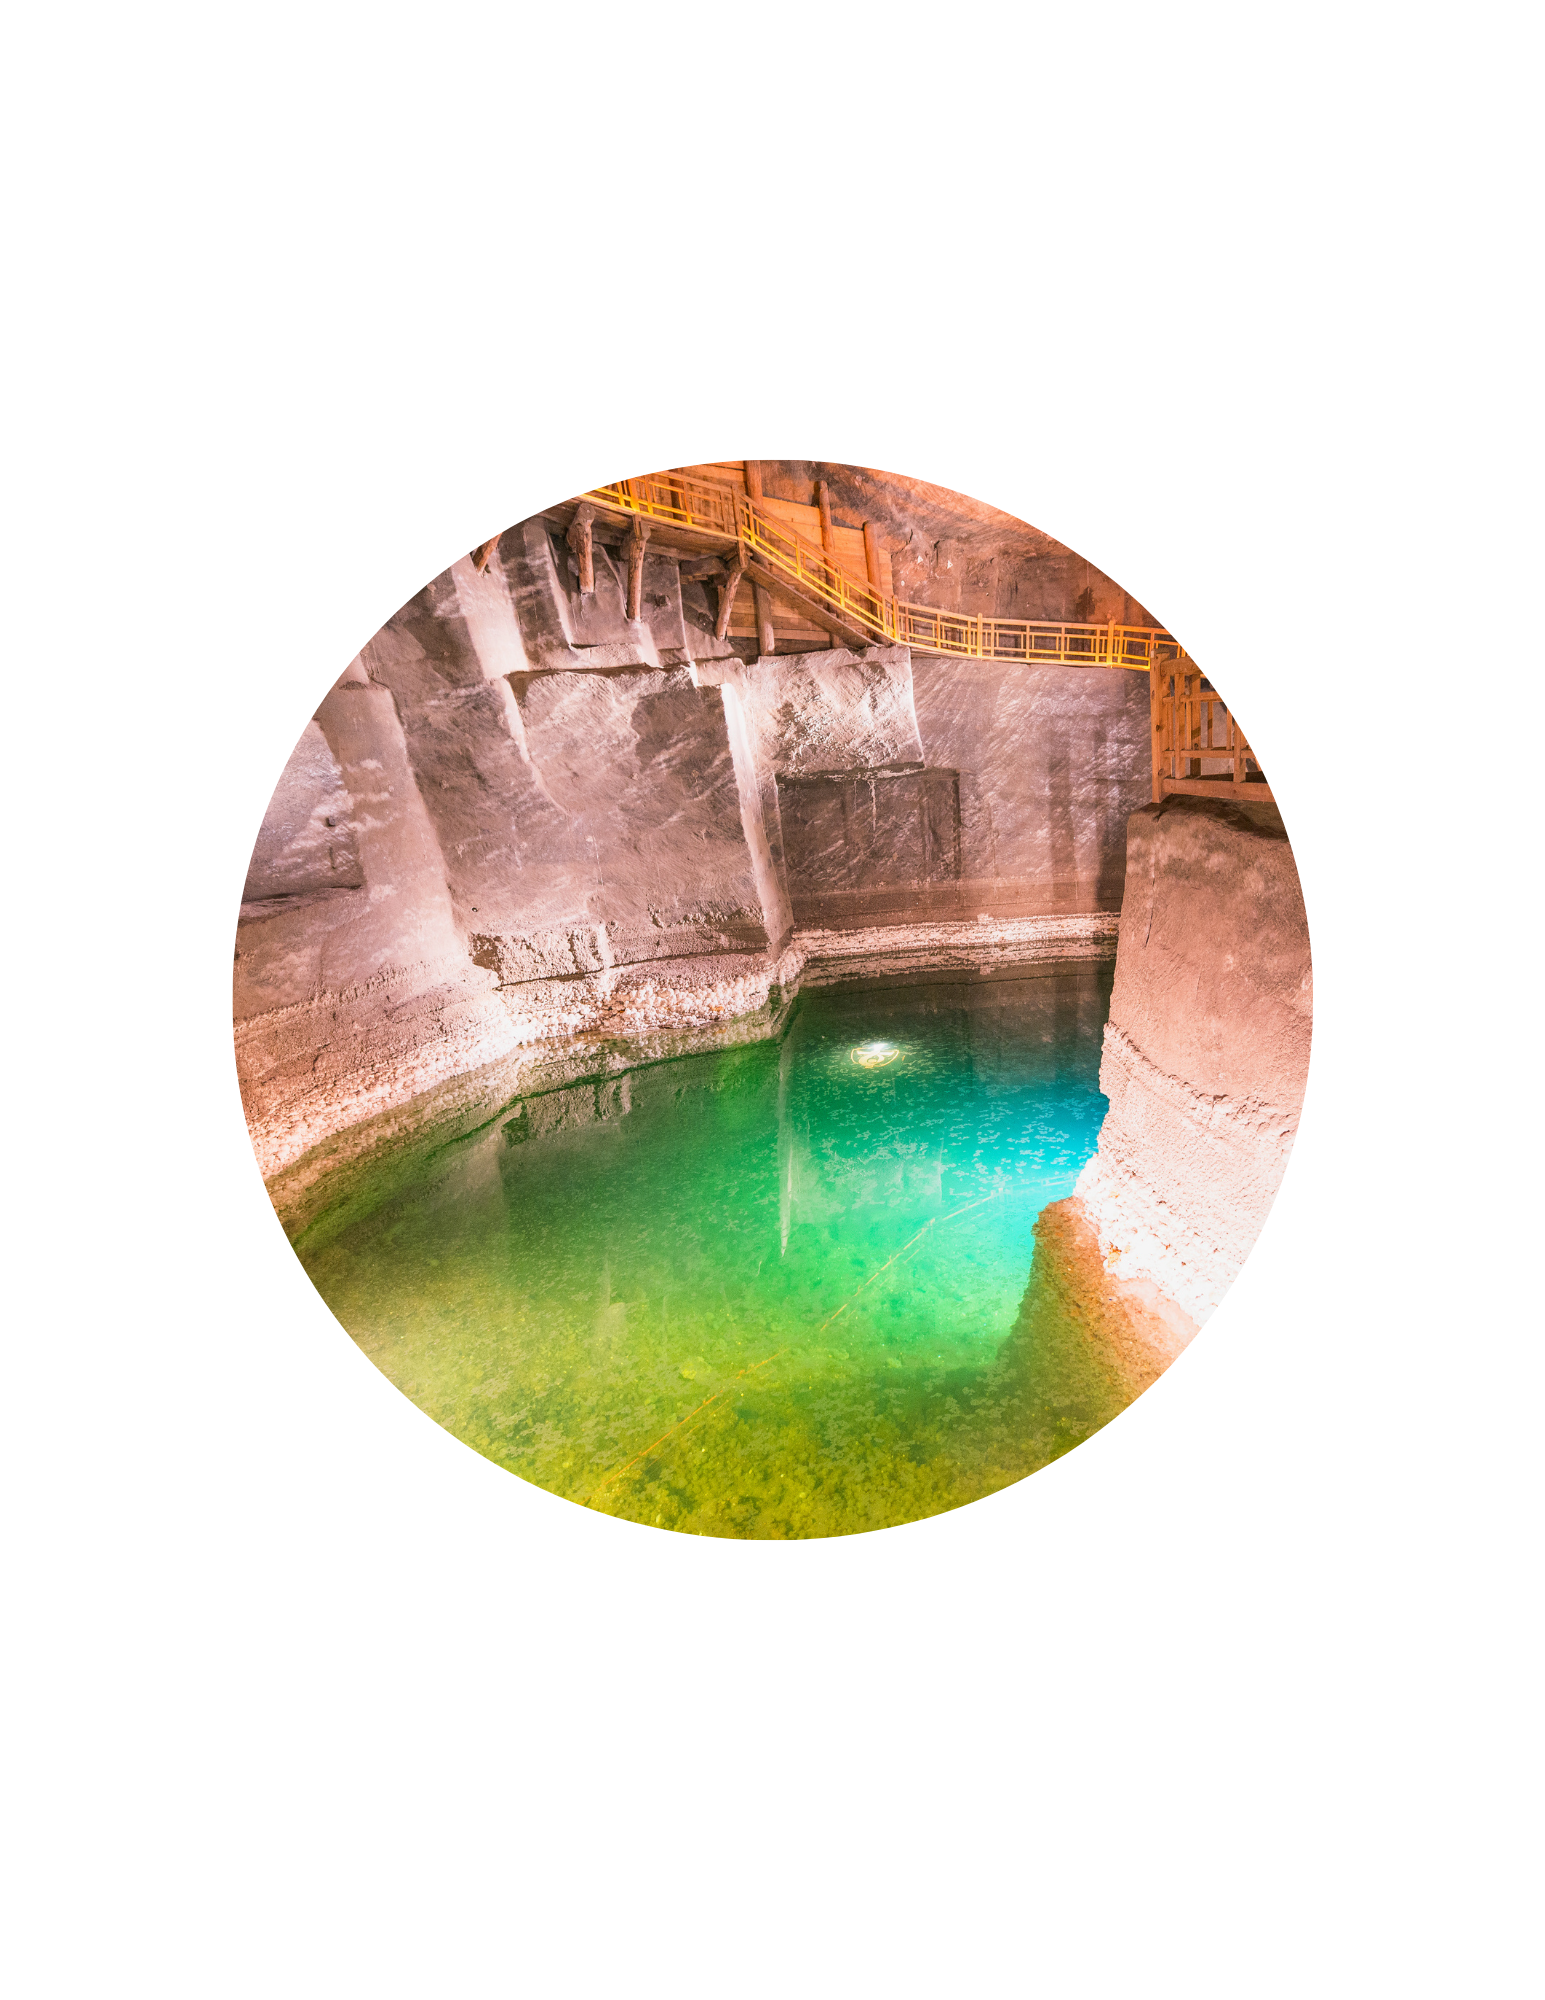 salt mine with blue-green water